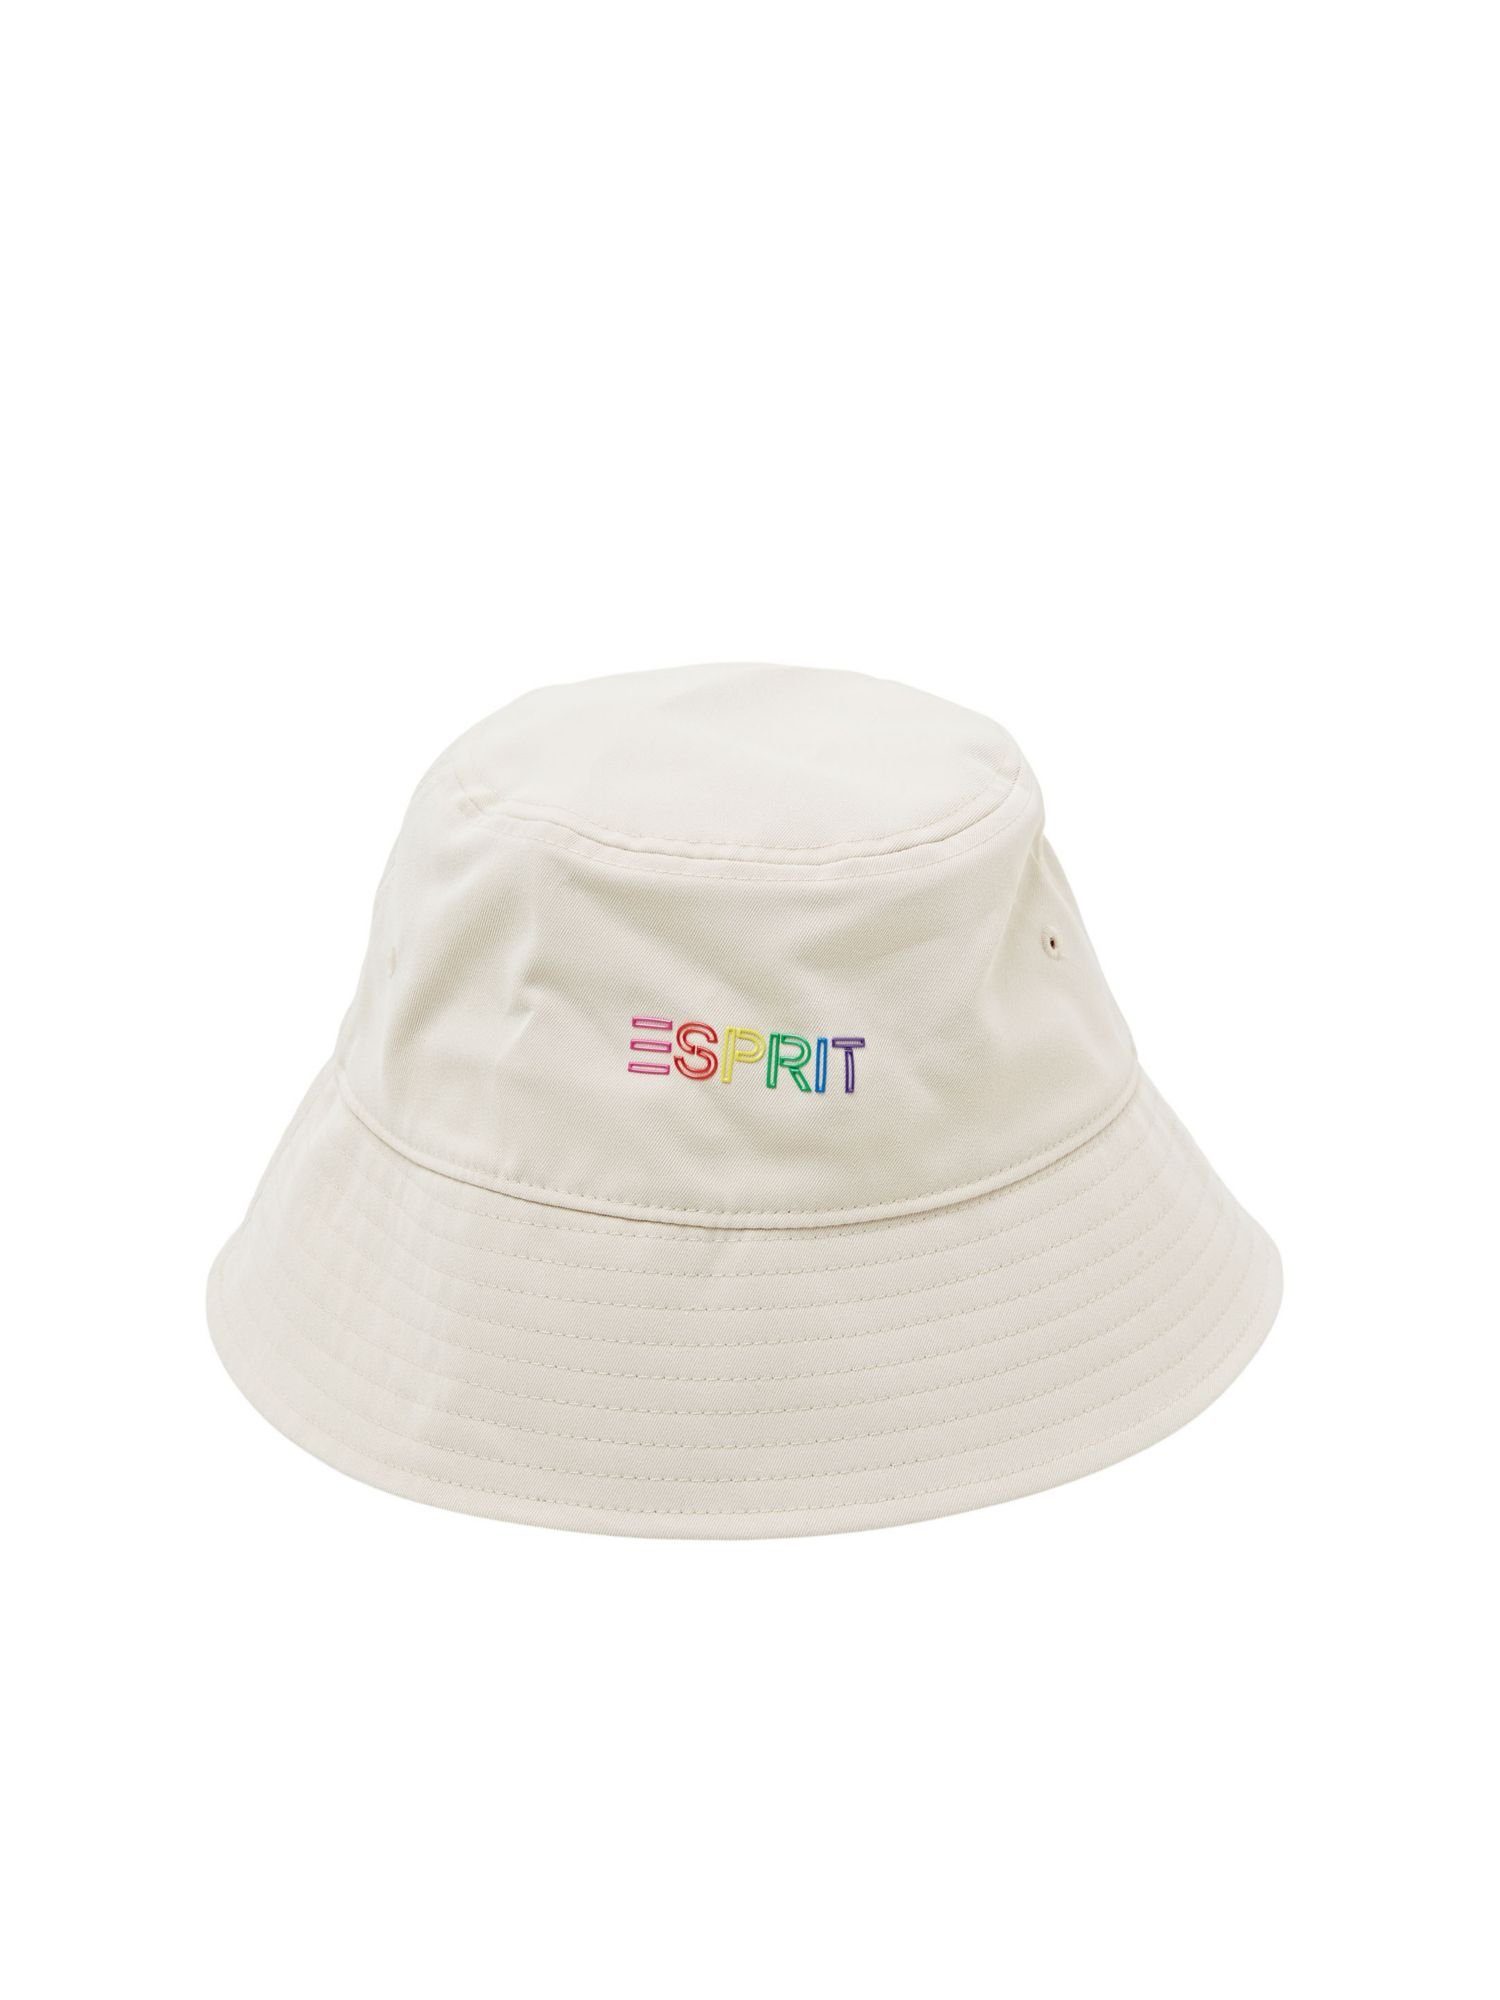 Esprit Baseball Cap Bucket Hat aus Twill mit Applikation SAND